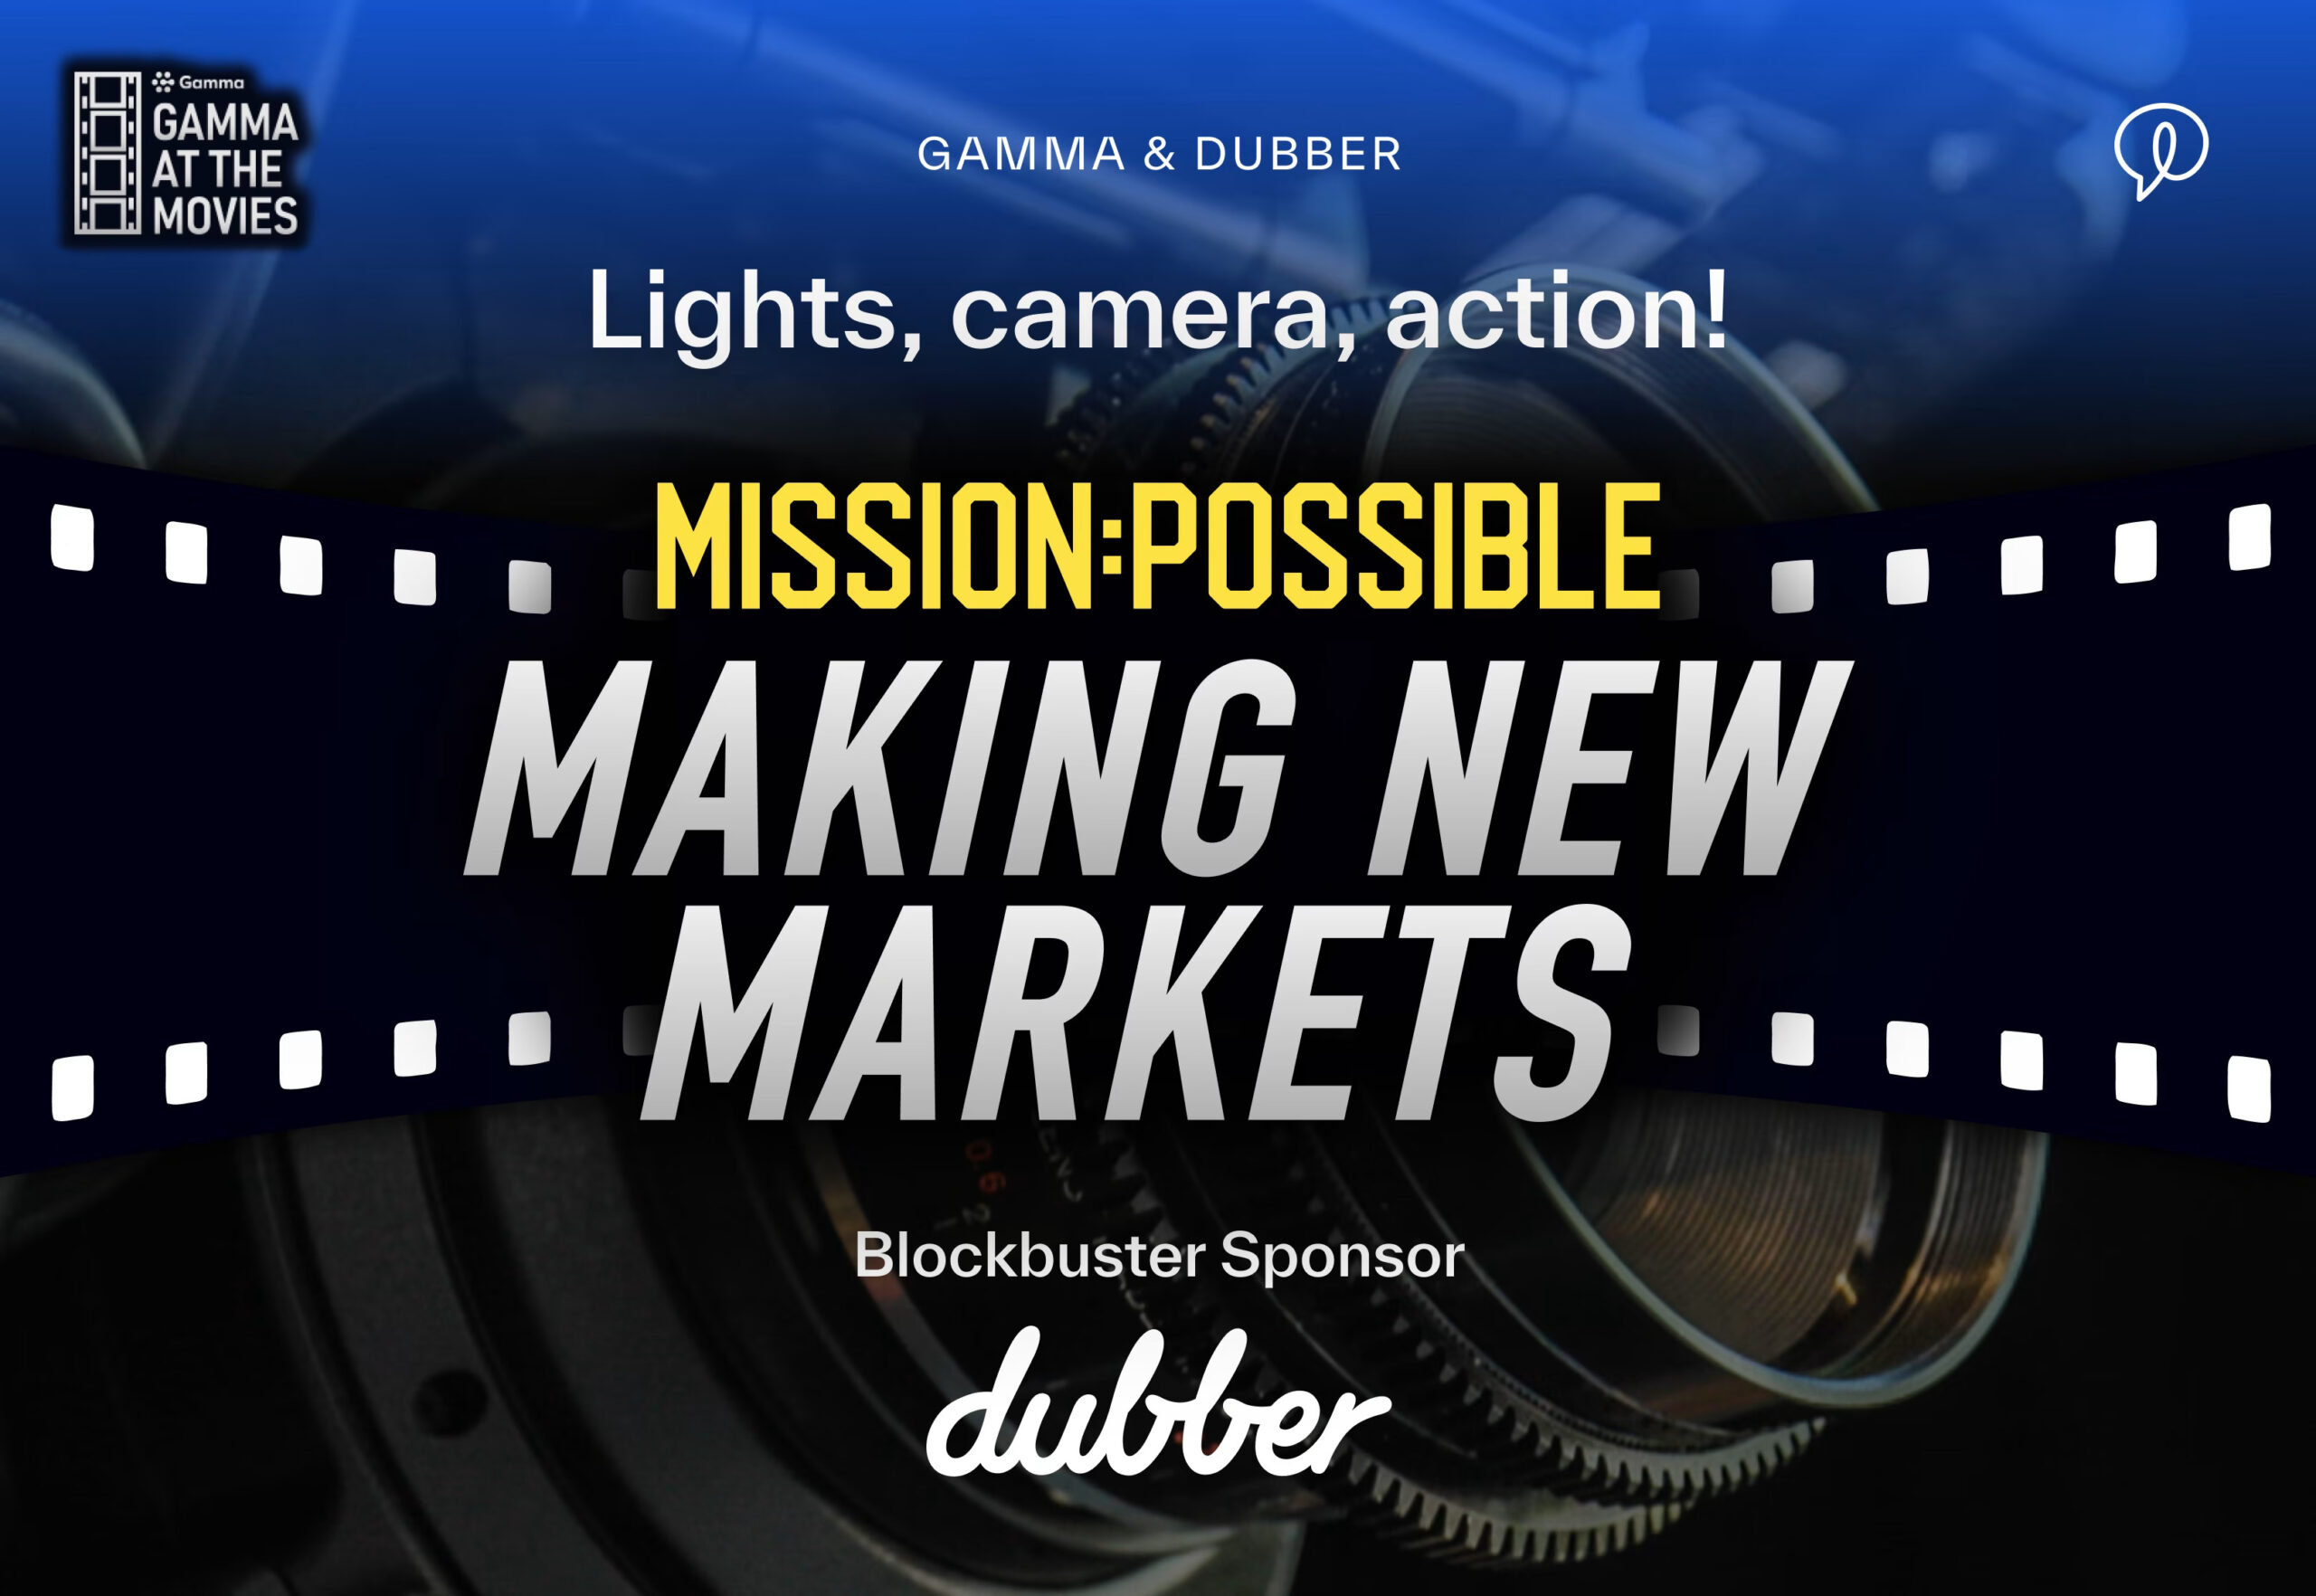 Dubber are a Blockbuster Sponsor at the Gamma Roadshow 2022!